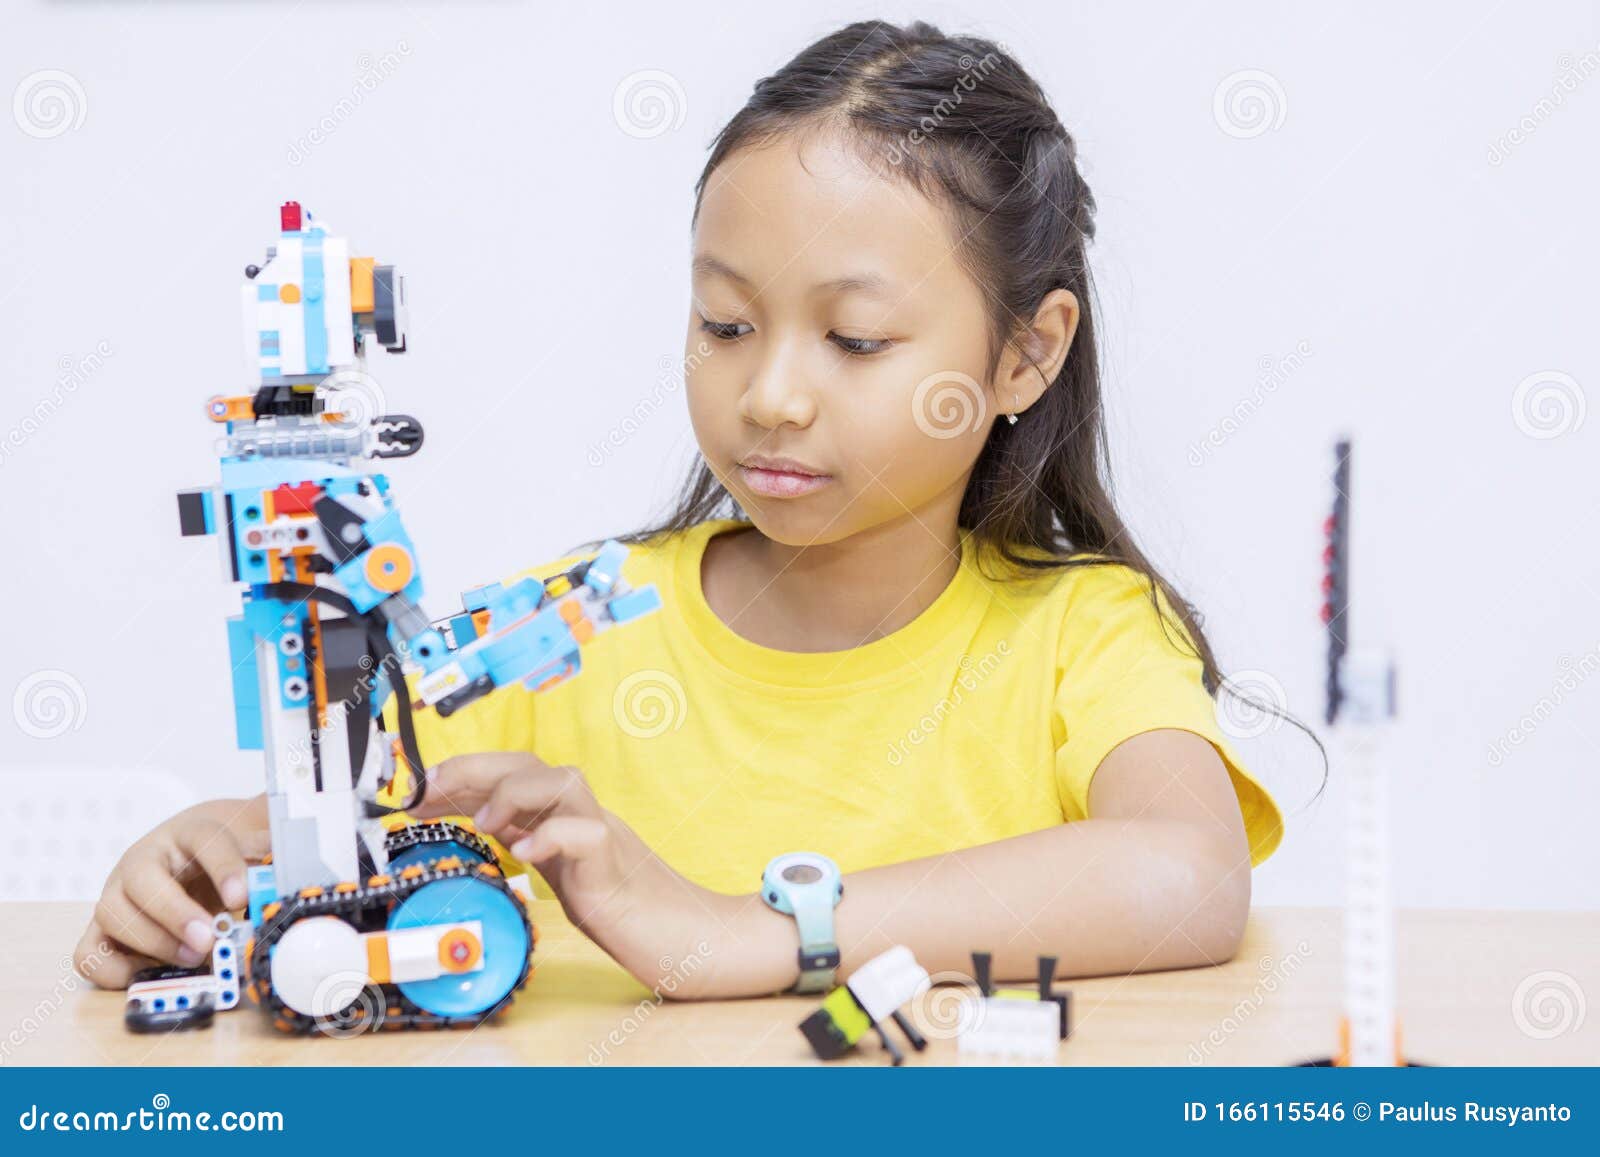 portrait of asian kid constructing a robot